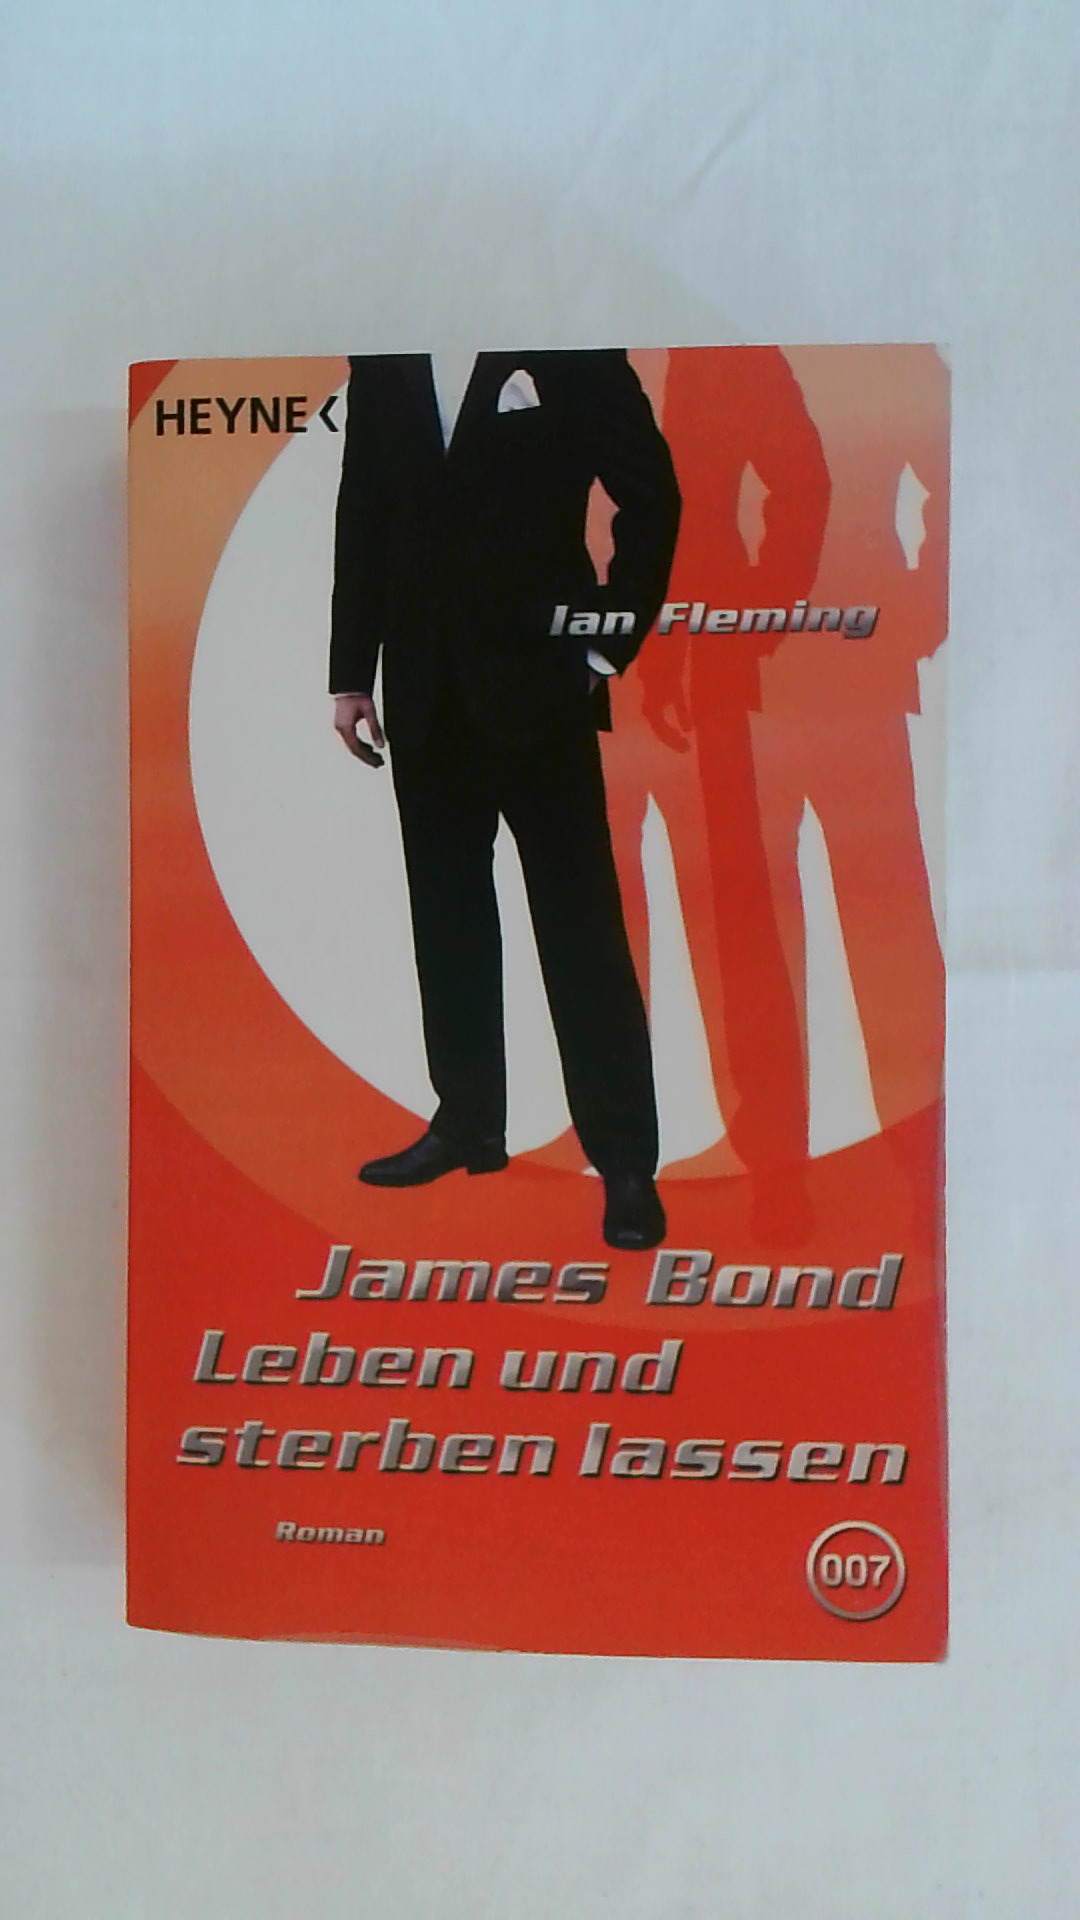 JAMES BOND, LEBEN UND STERBEN LASSEN. - Fleming, Ian